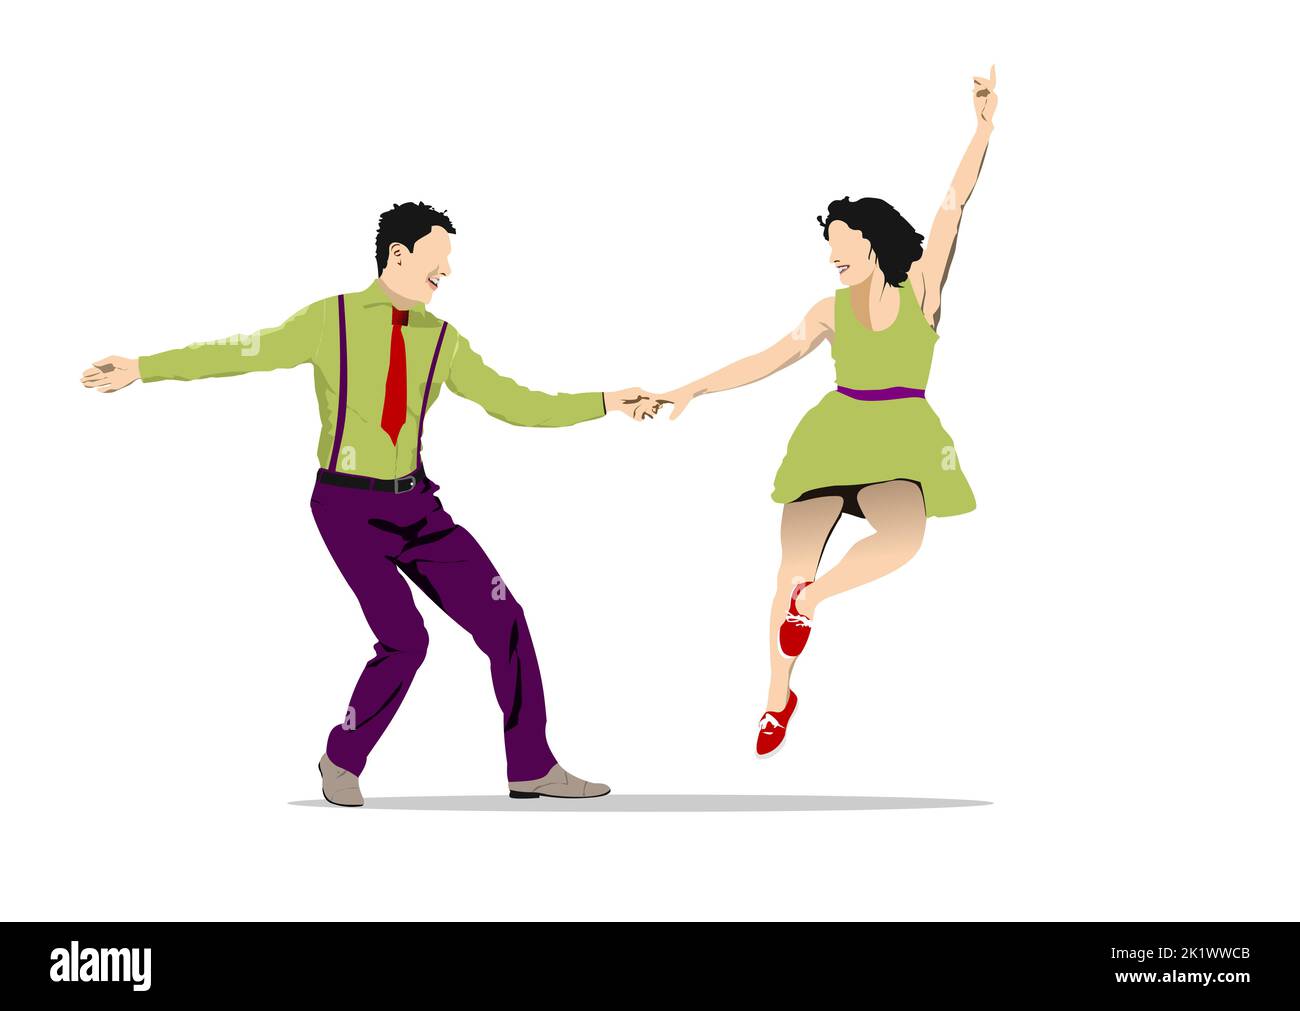 Lindy hop dance Stock Vector Images - Alamy